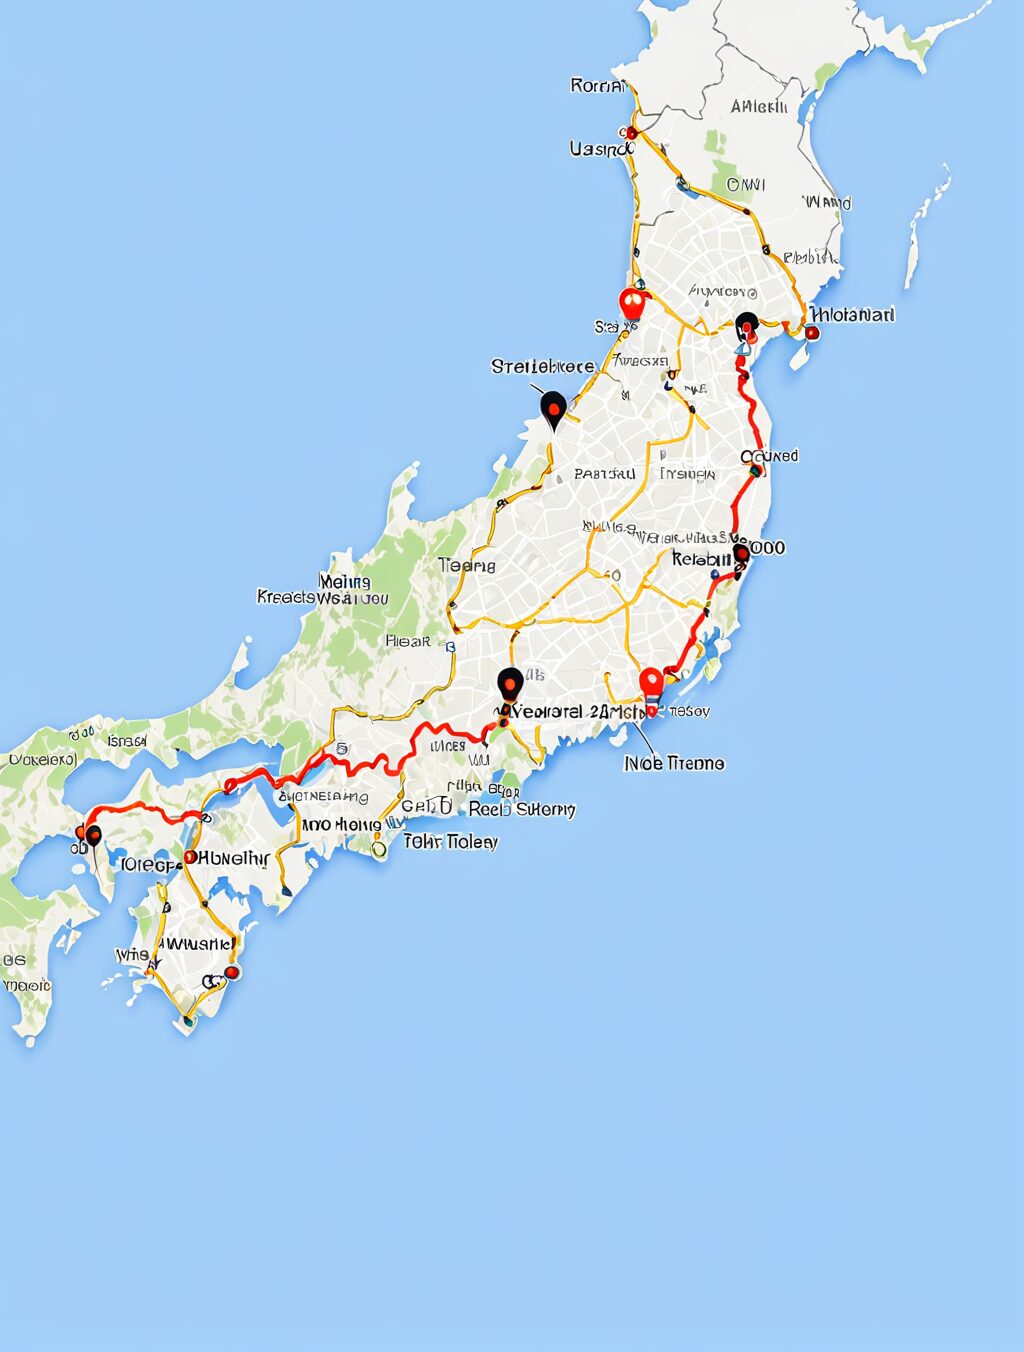 japan road trip itinerary